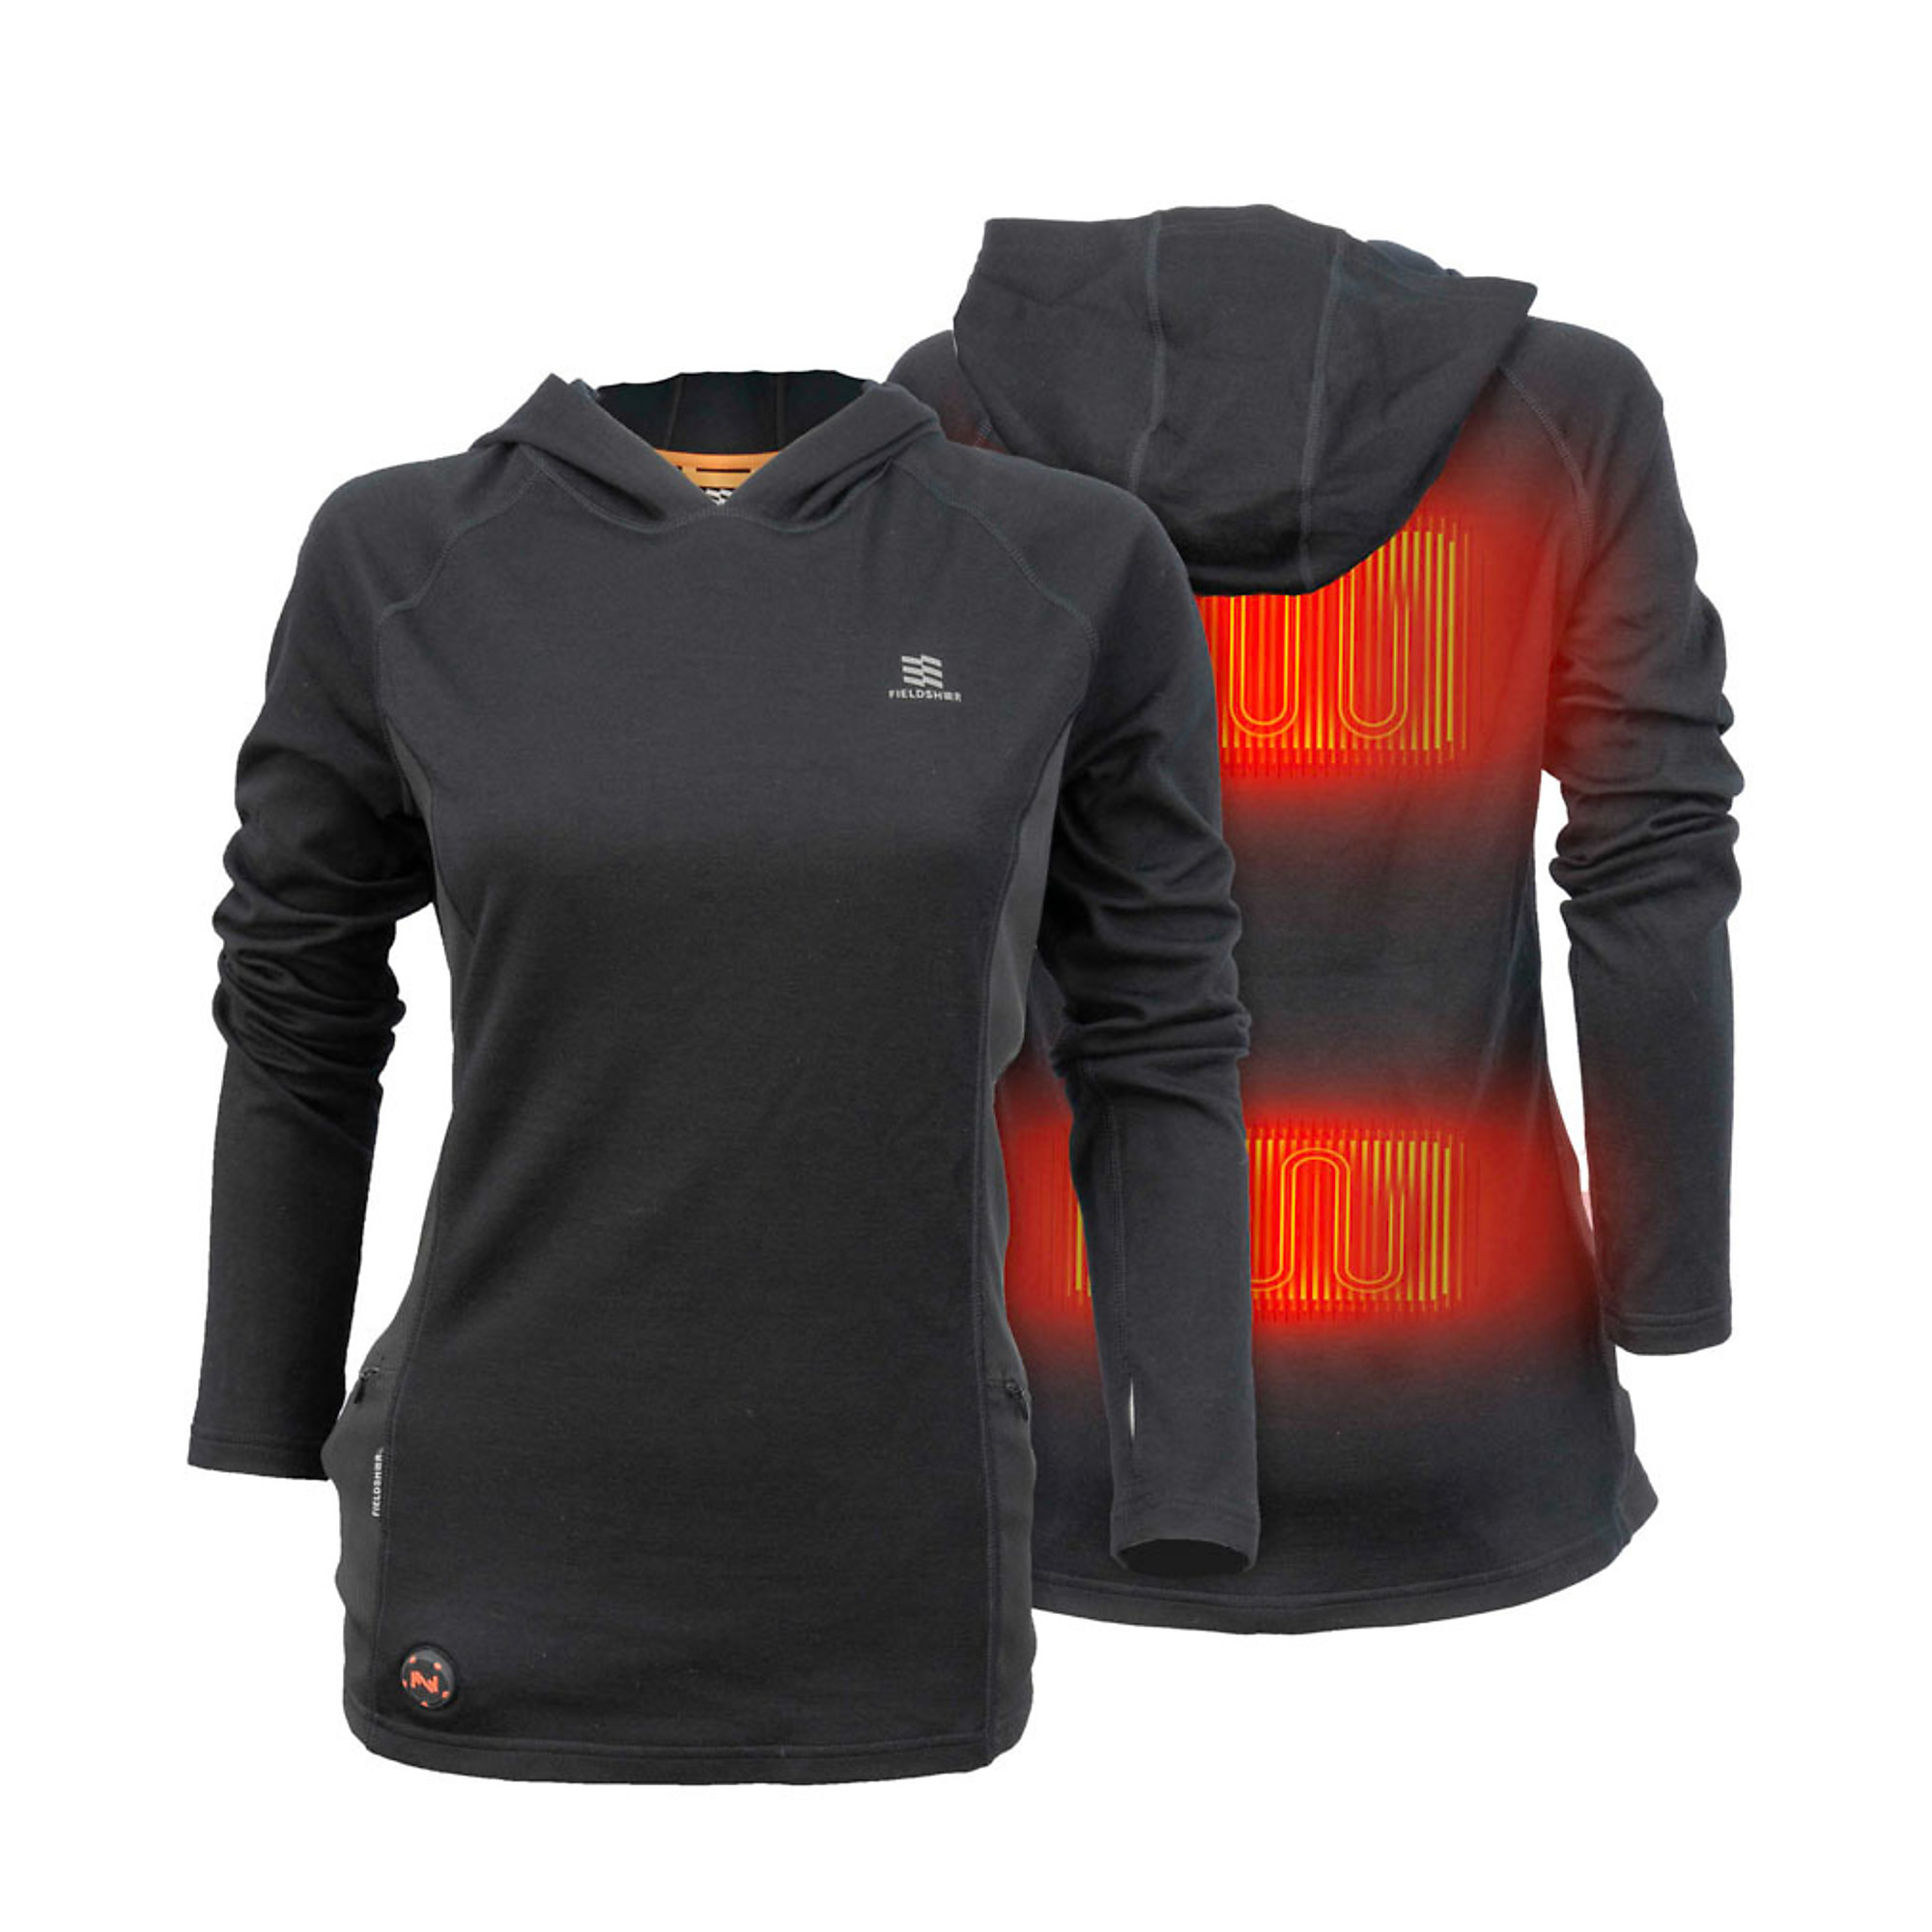 Fieldsheer, Women's Merino Heated Baselayer Shirt, Size M, Color Black, Model MWWT14010321